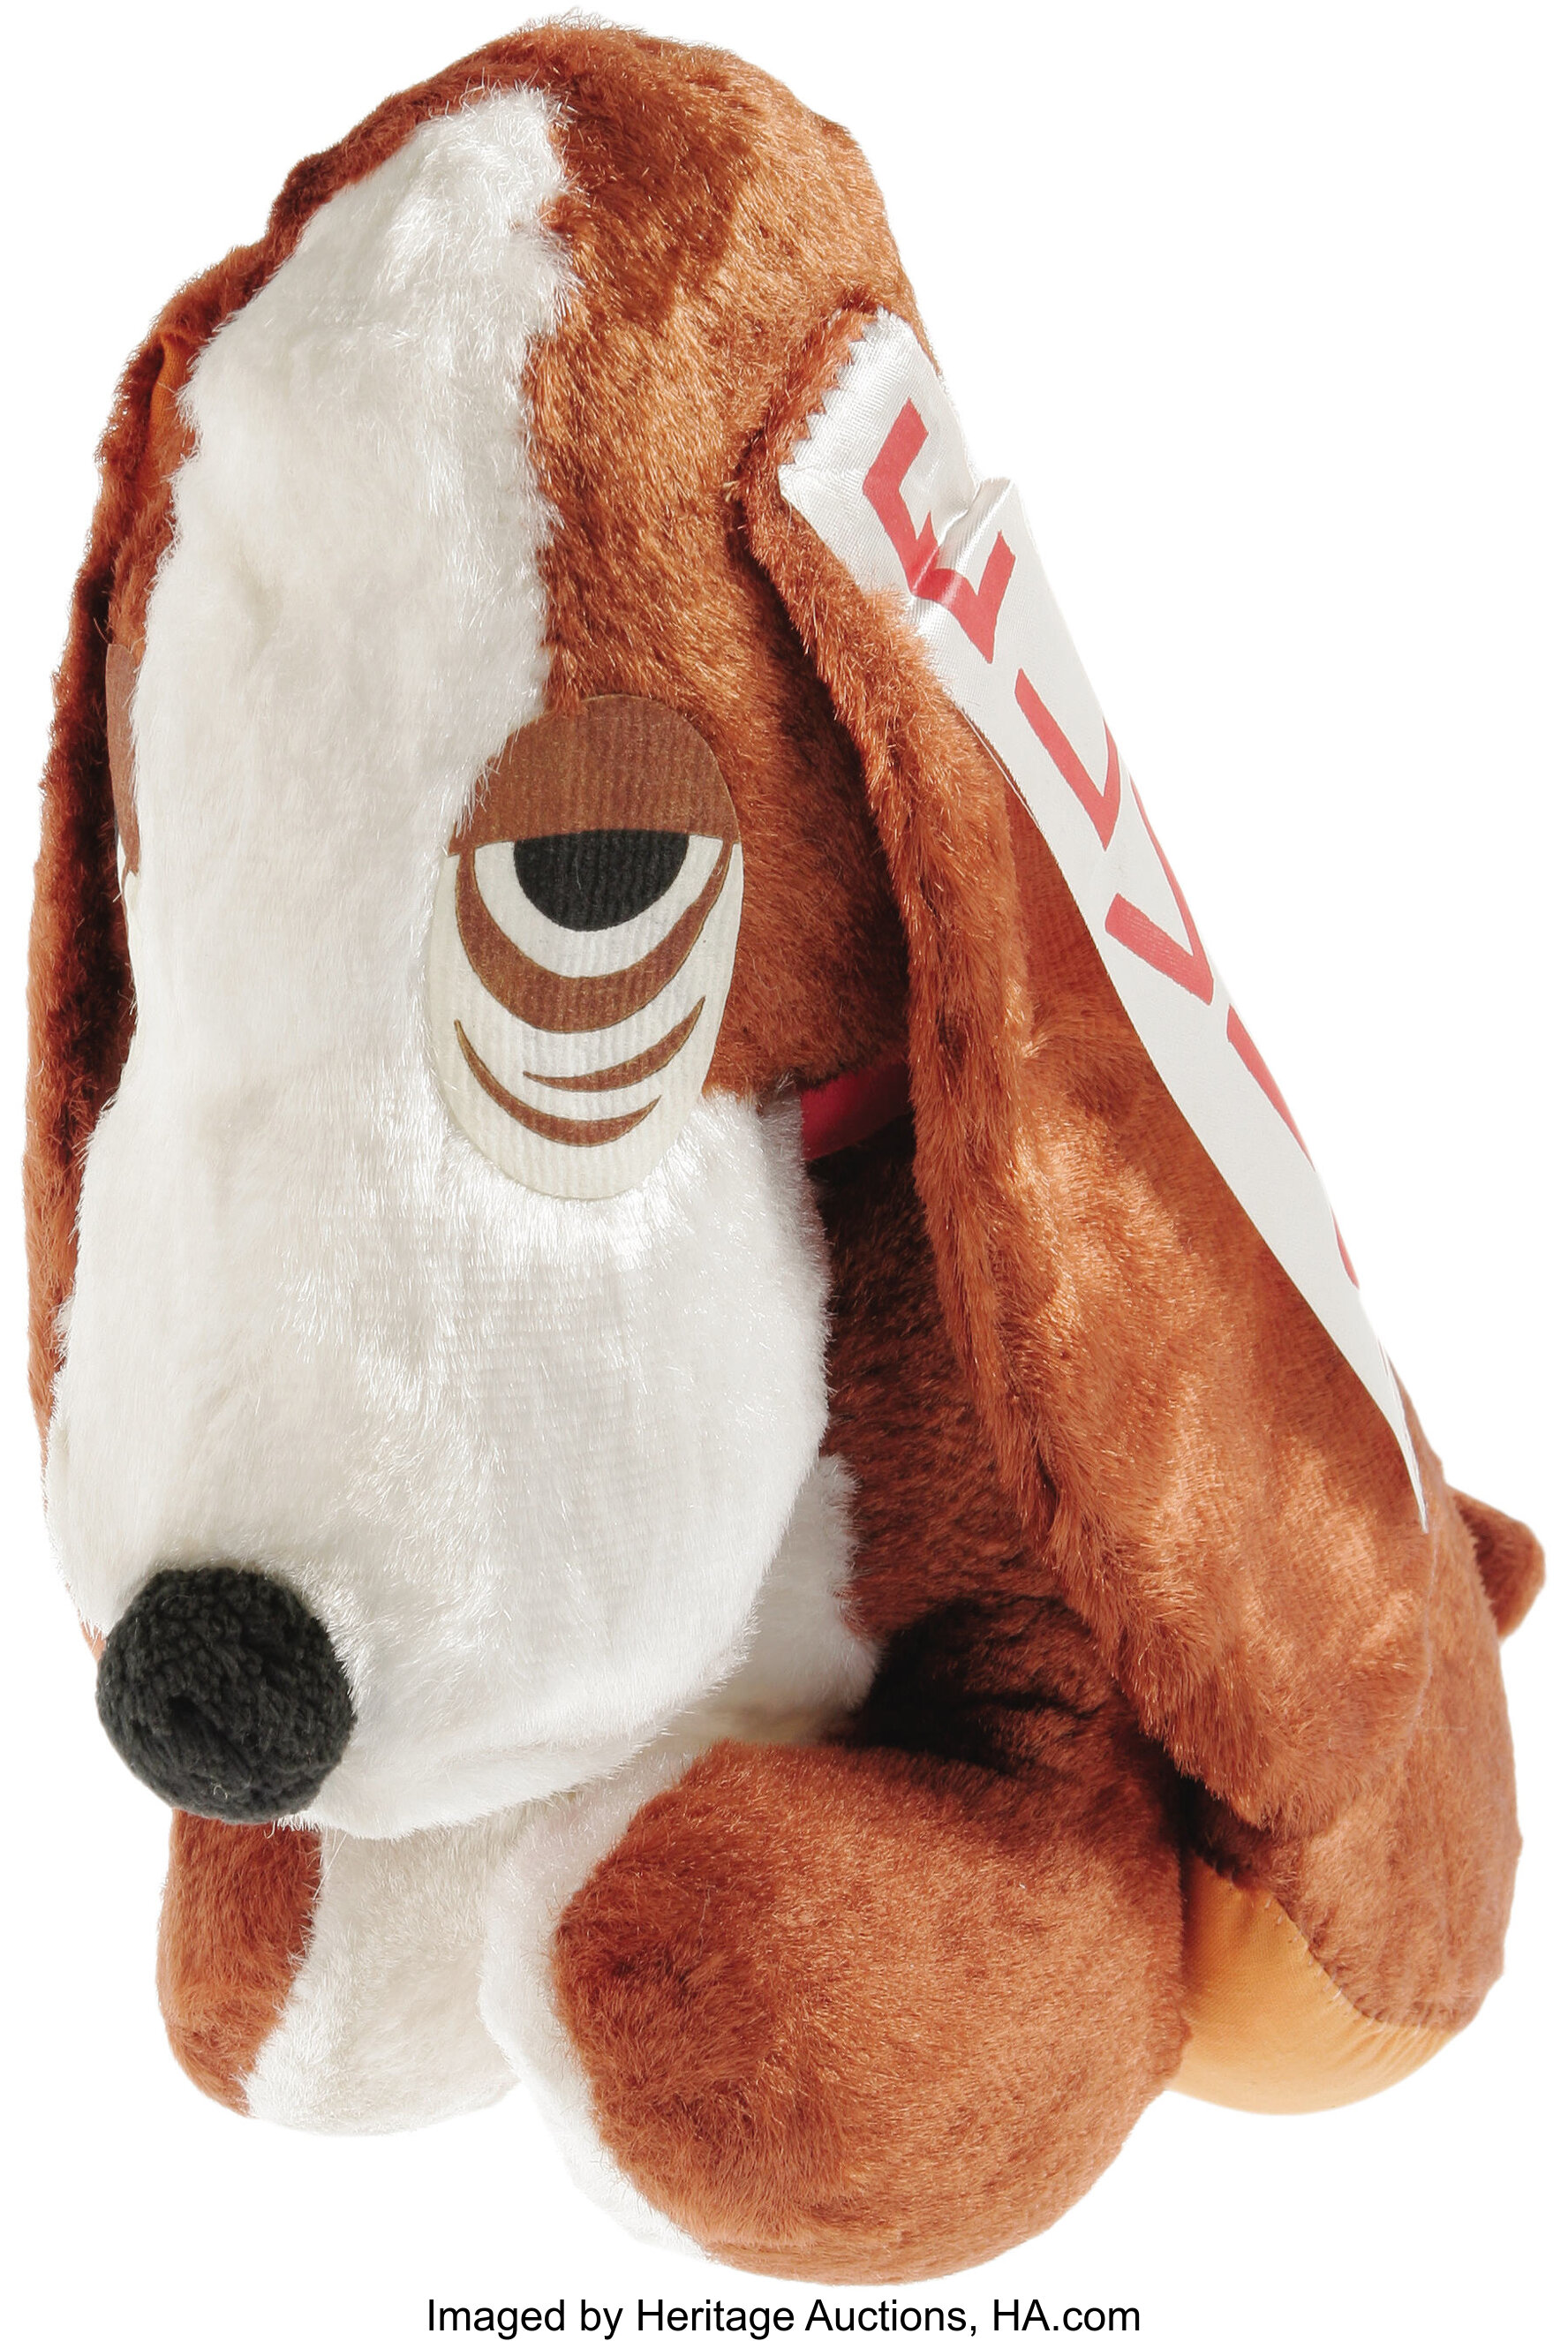 Elvis Presley Hound Dog Stuffed Toy. An adorable hound dog plush